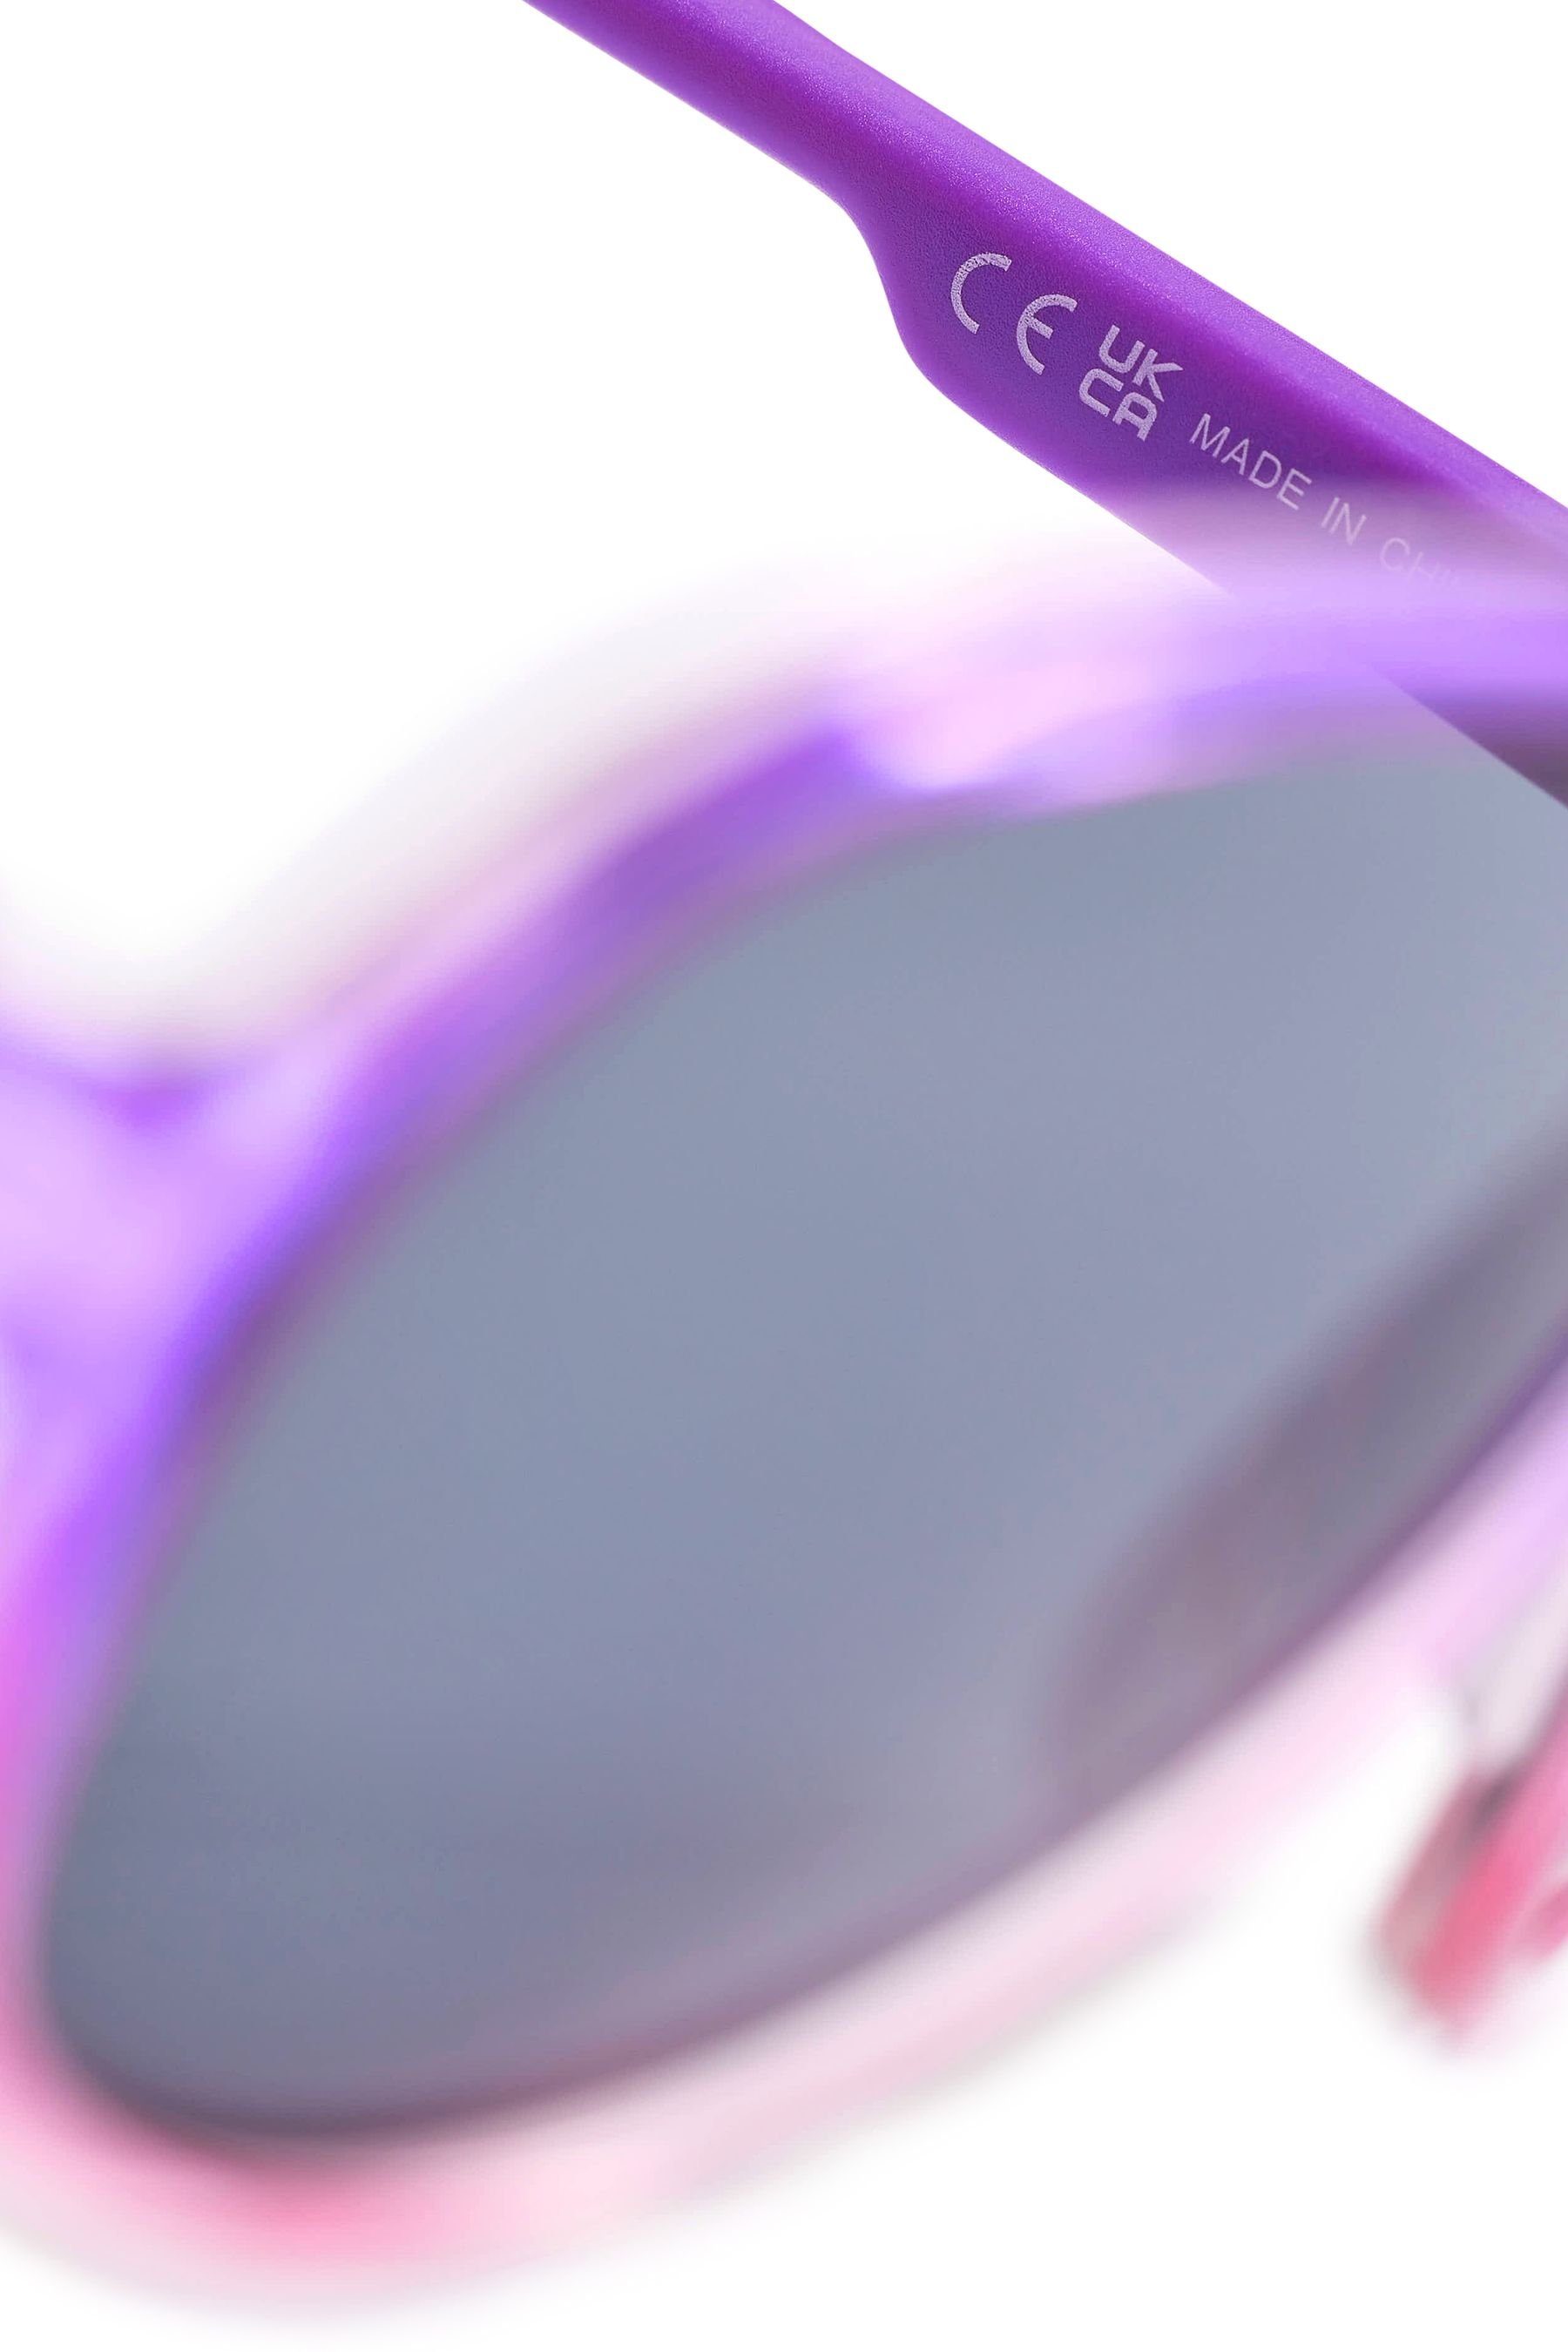 Pilotensonnenbrille Purple Lilac Kunststoff Sonnenbrille aus Next (1-St)